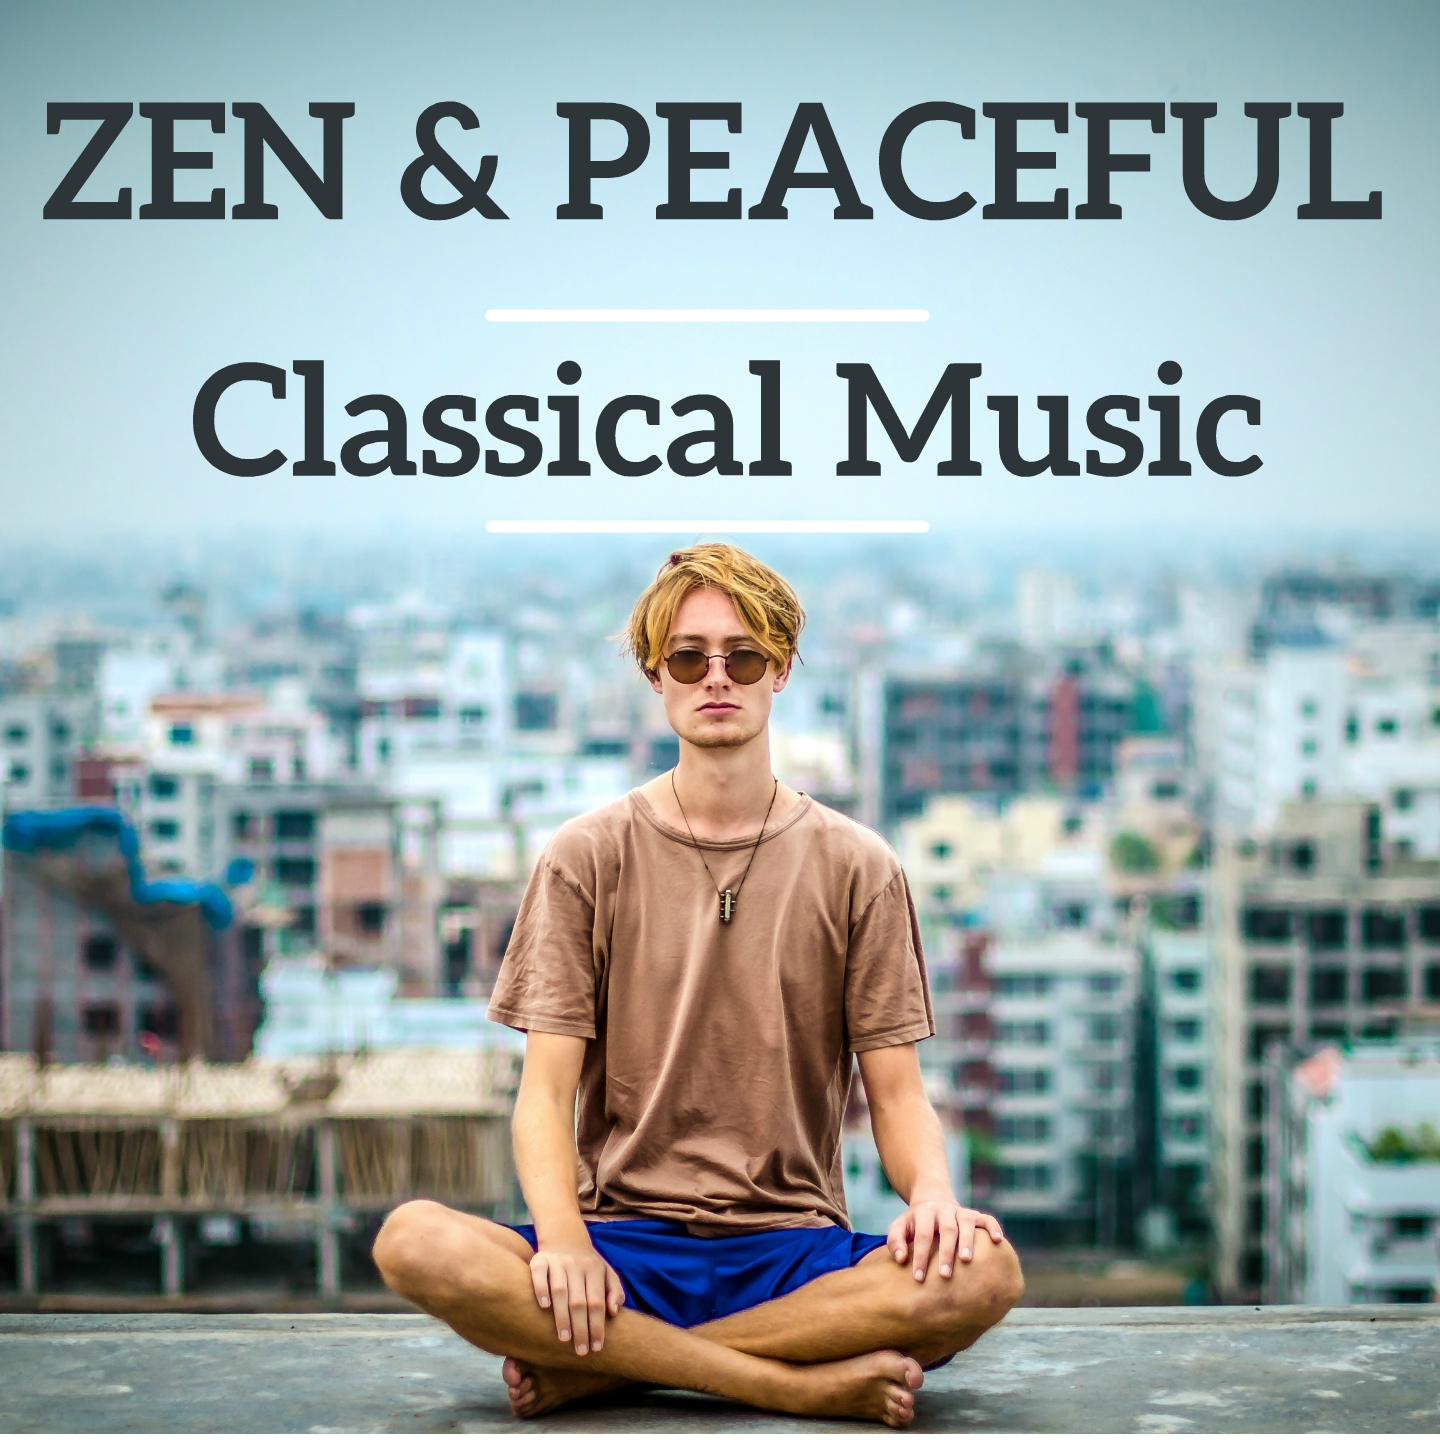 Zen & Peaceful Classical Music